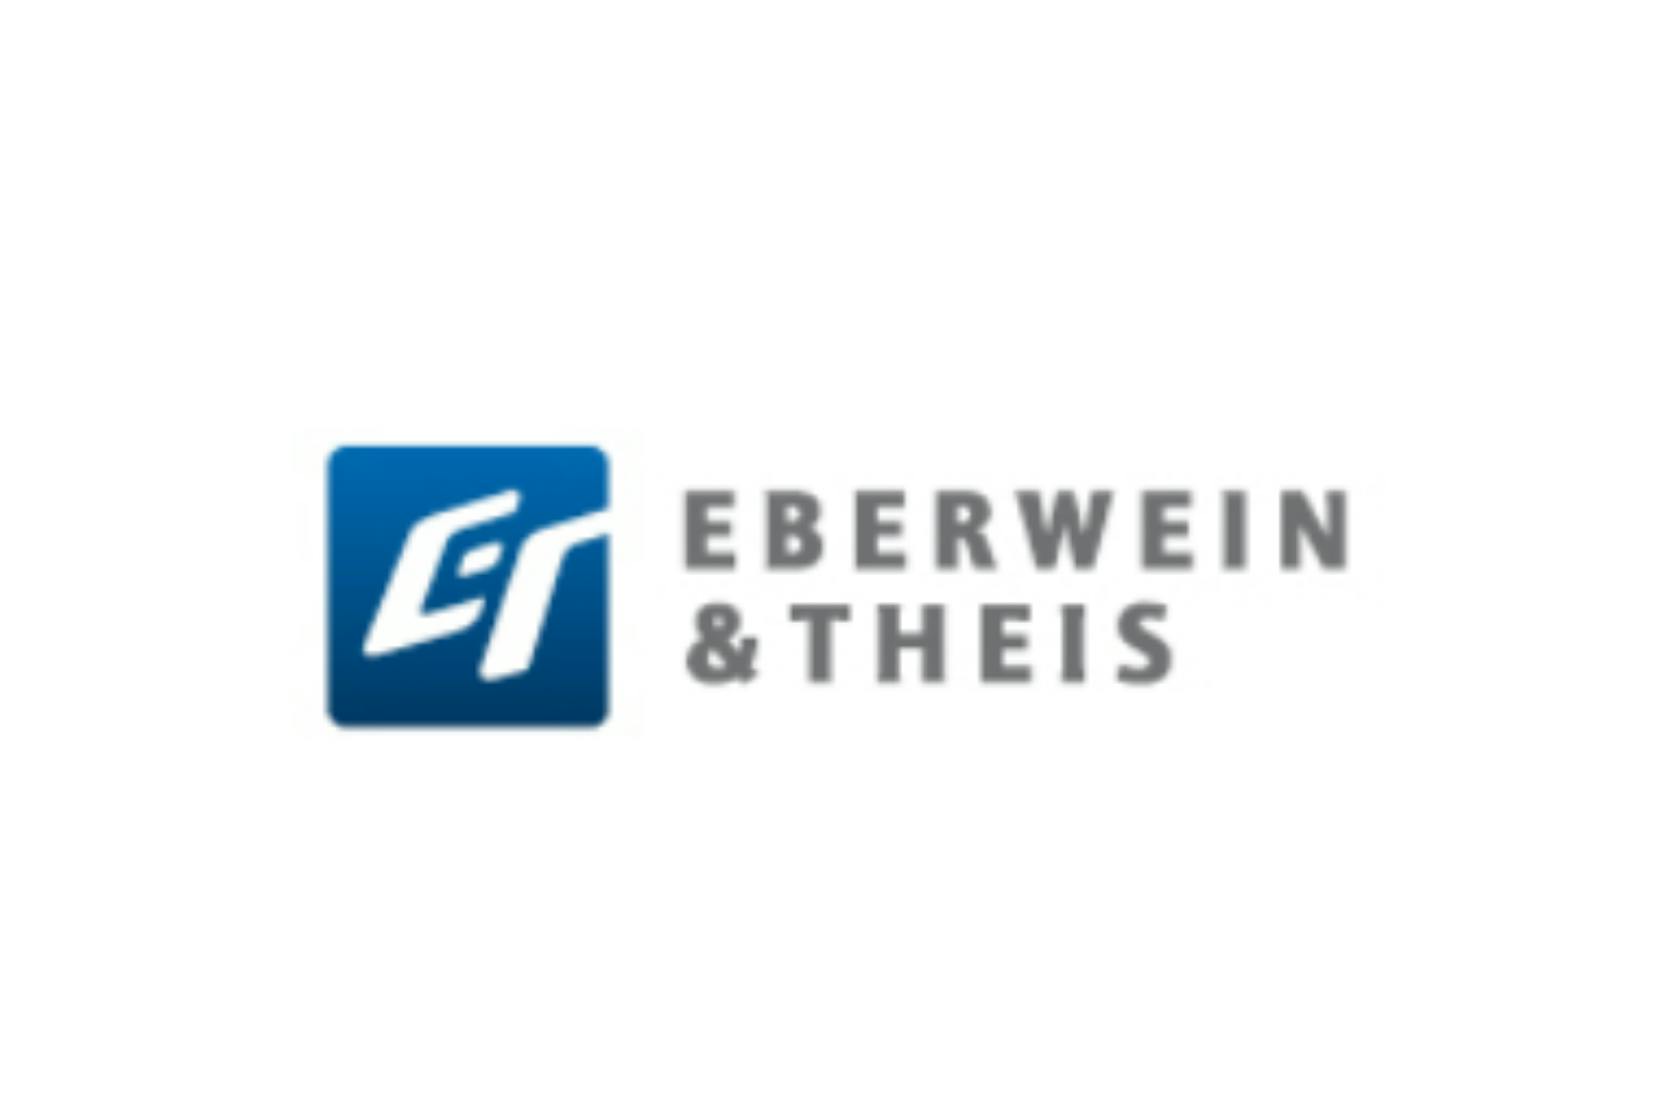 Eberwein & Theis GbR